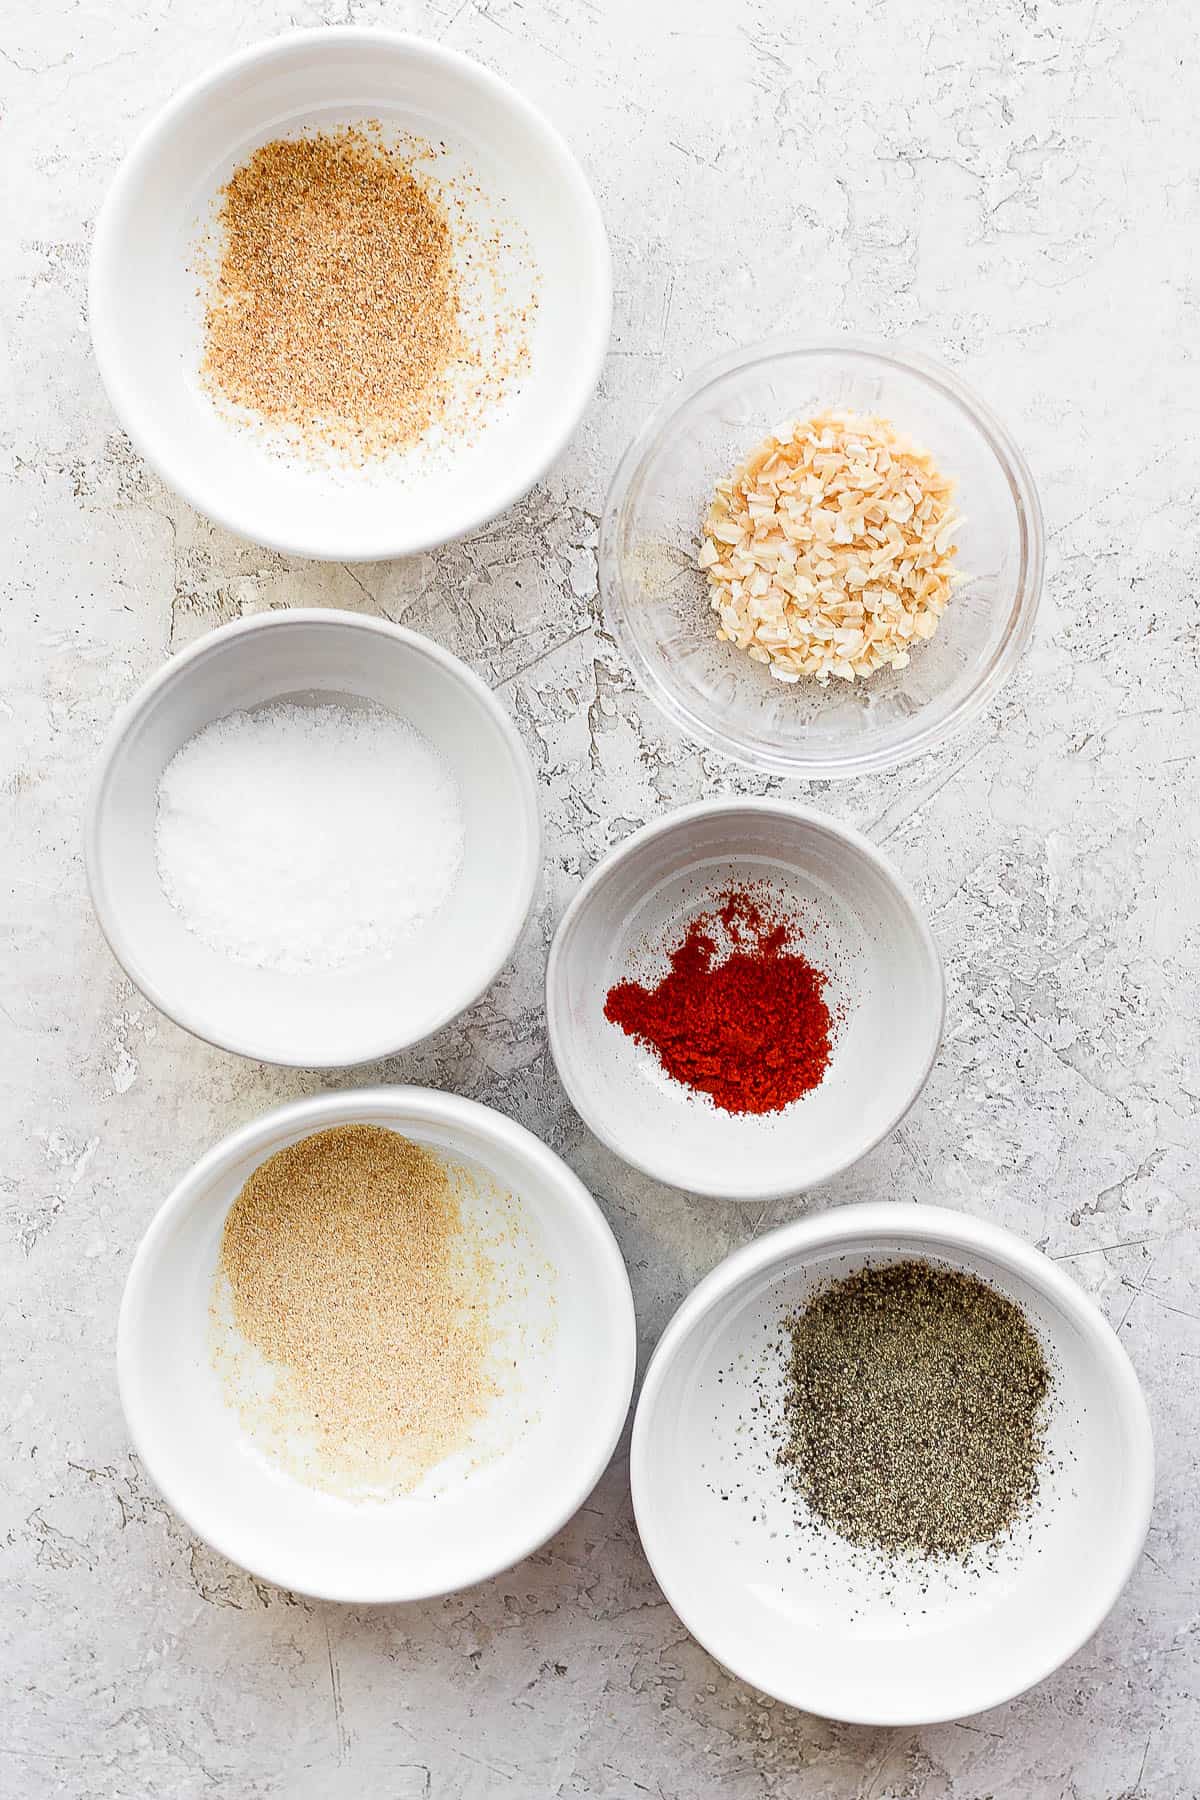 ndividual small bowls filled with each seasoning ingredient; kosher salt, ground pepper, paprika, onion powder, garlic powder, and dried onion. 